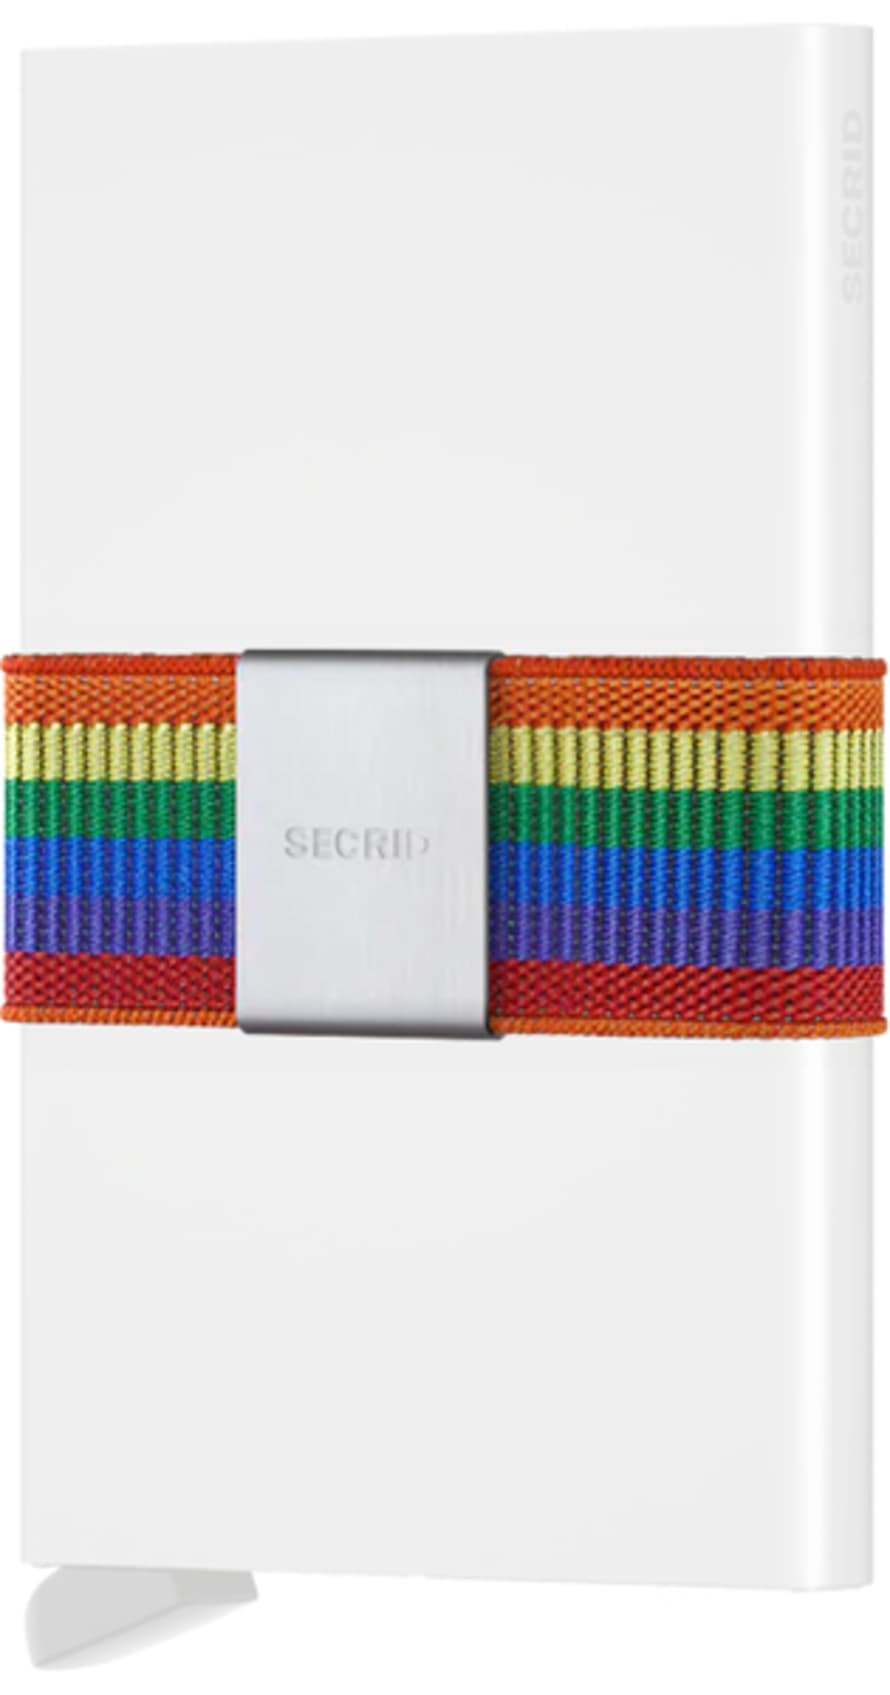 Secrid Money Band - Rainbow